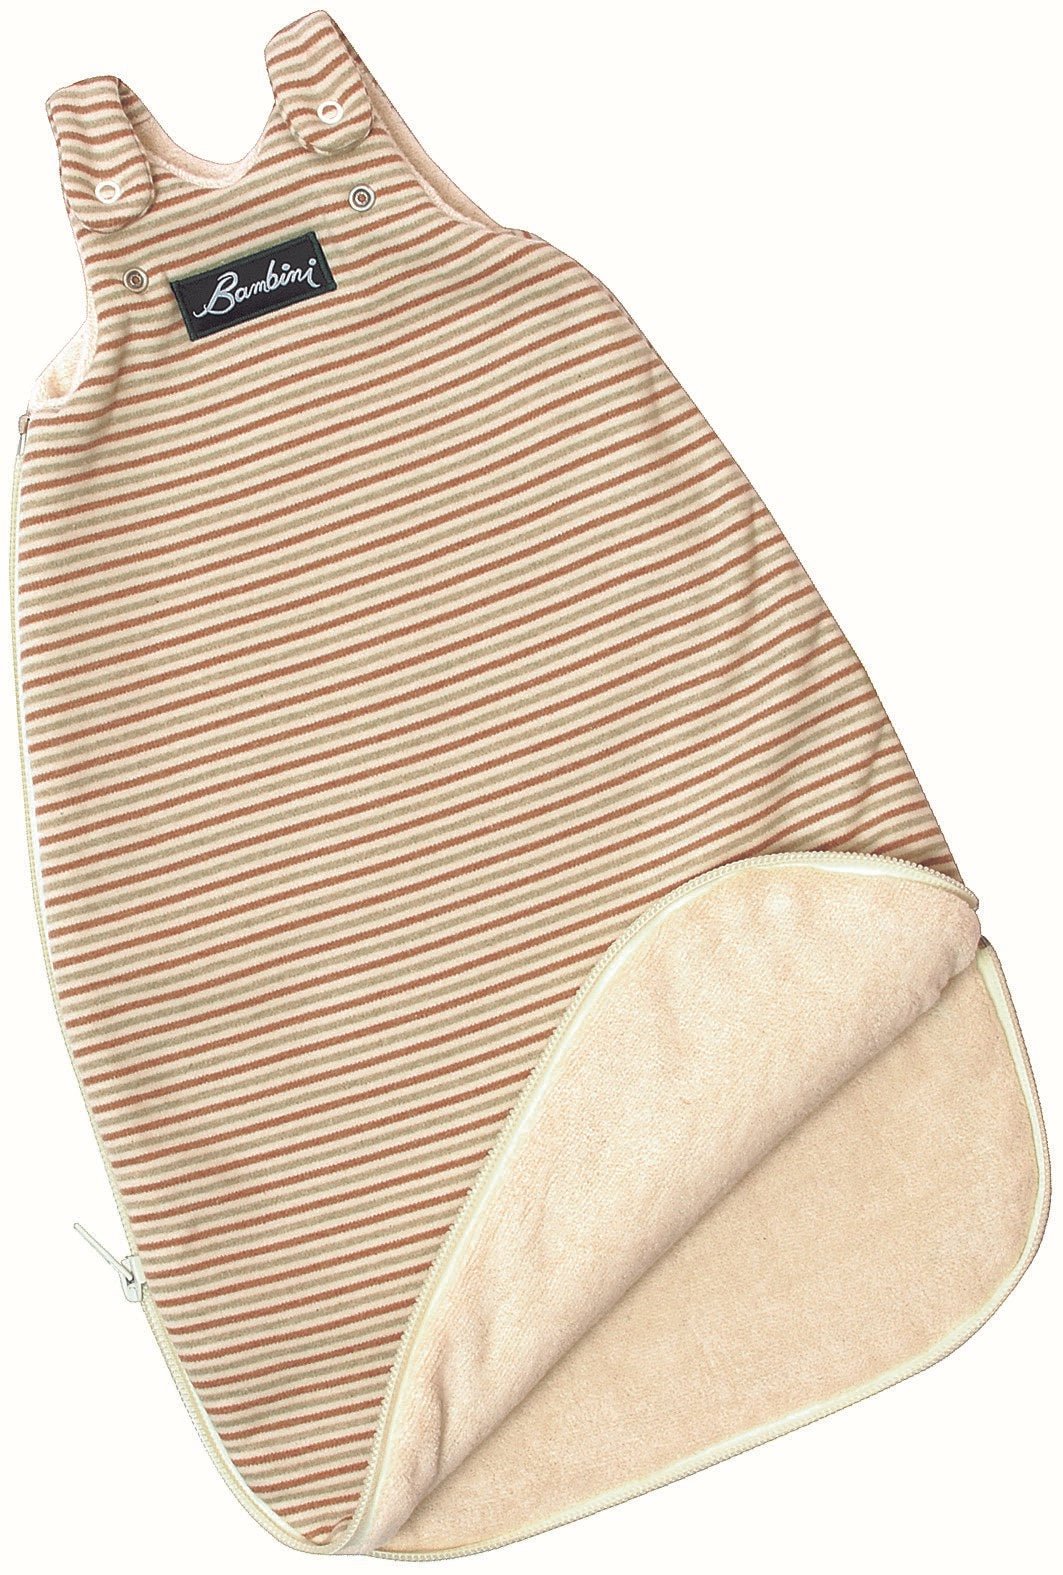 Bambini-Schlafsack Mini für Frühchen - MyBabyWonder